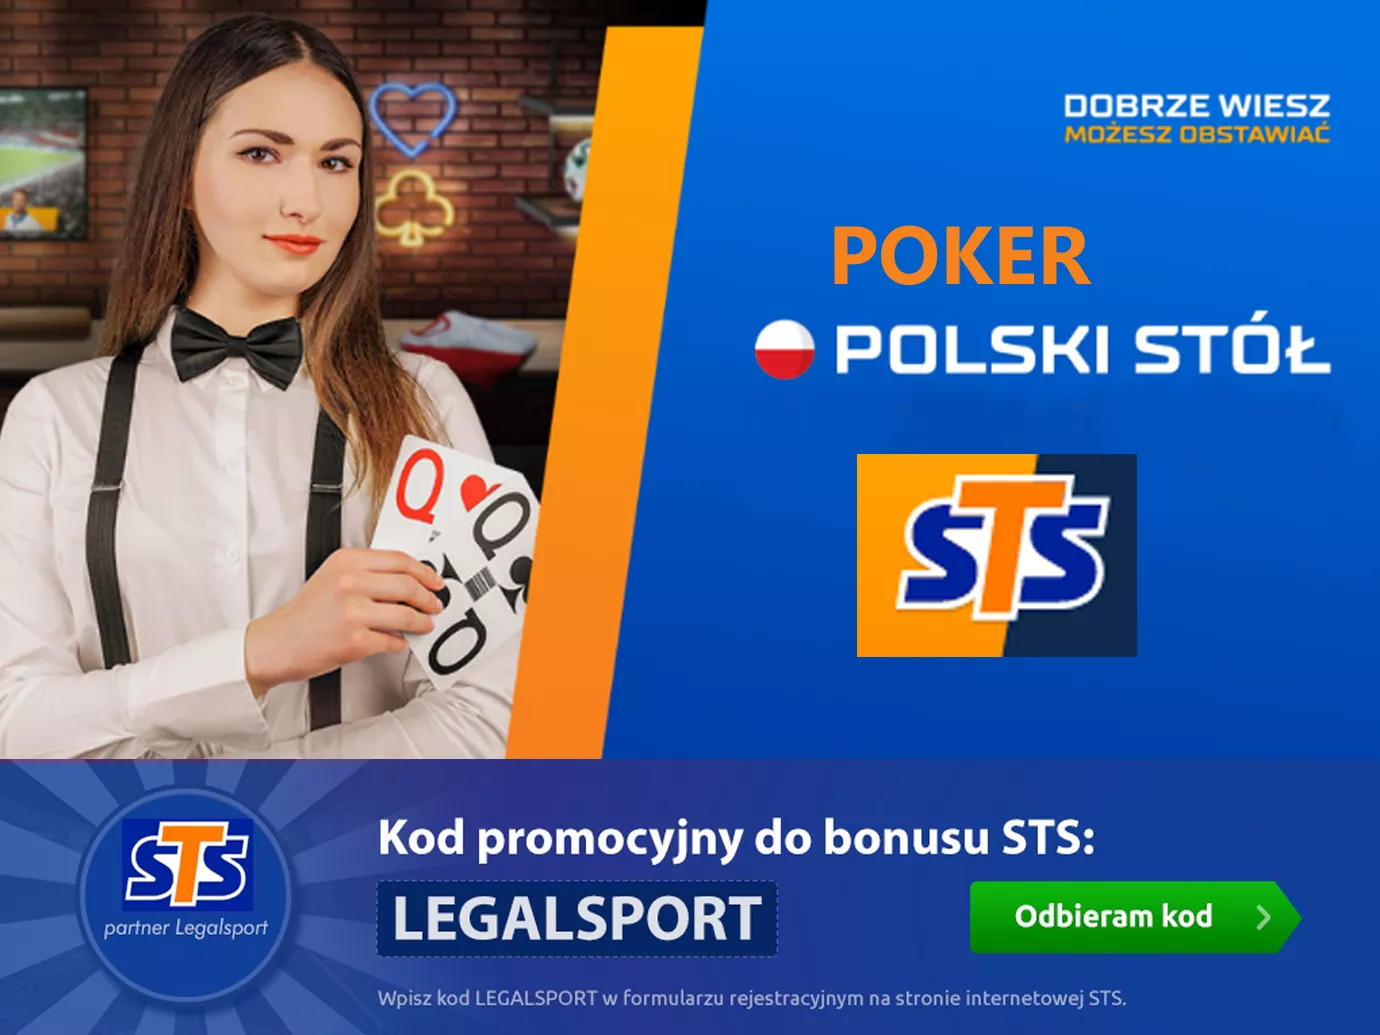 Polski poker room w STS BetGames online